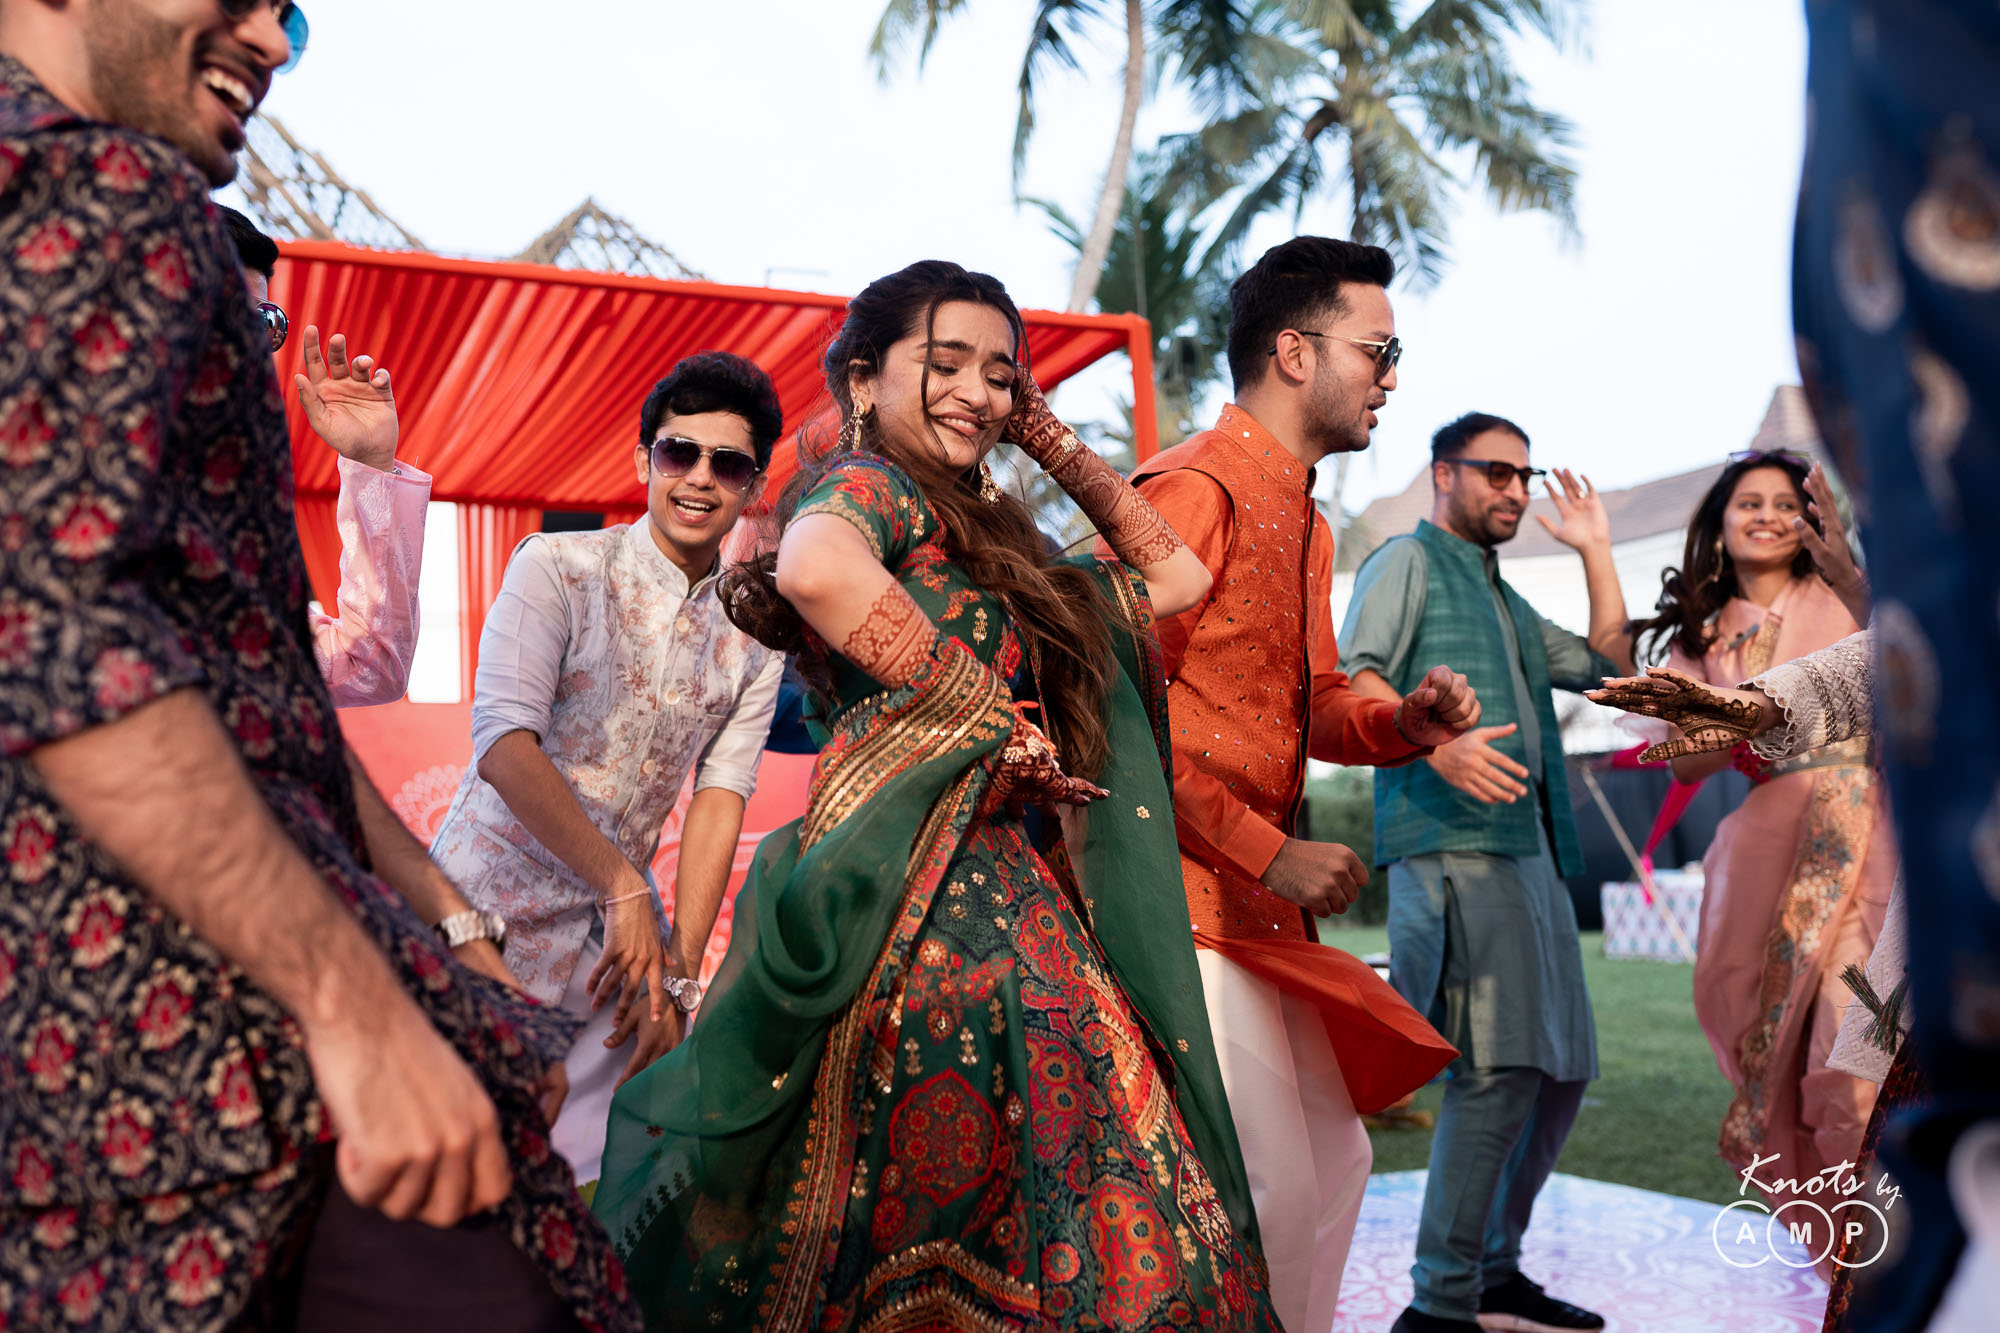 Destination-wedding-at-Grand-Hyatt-Goa-11-of-76